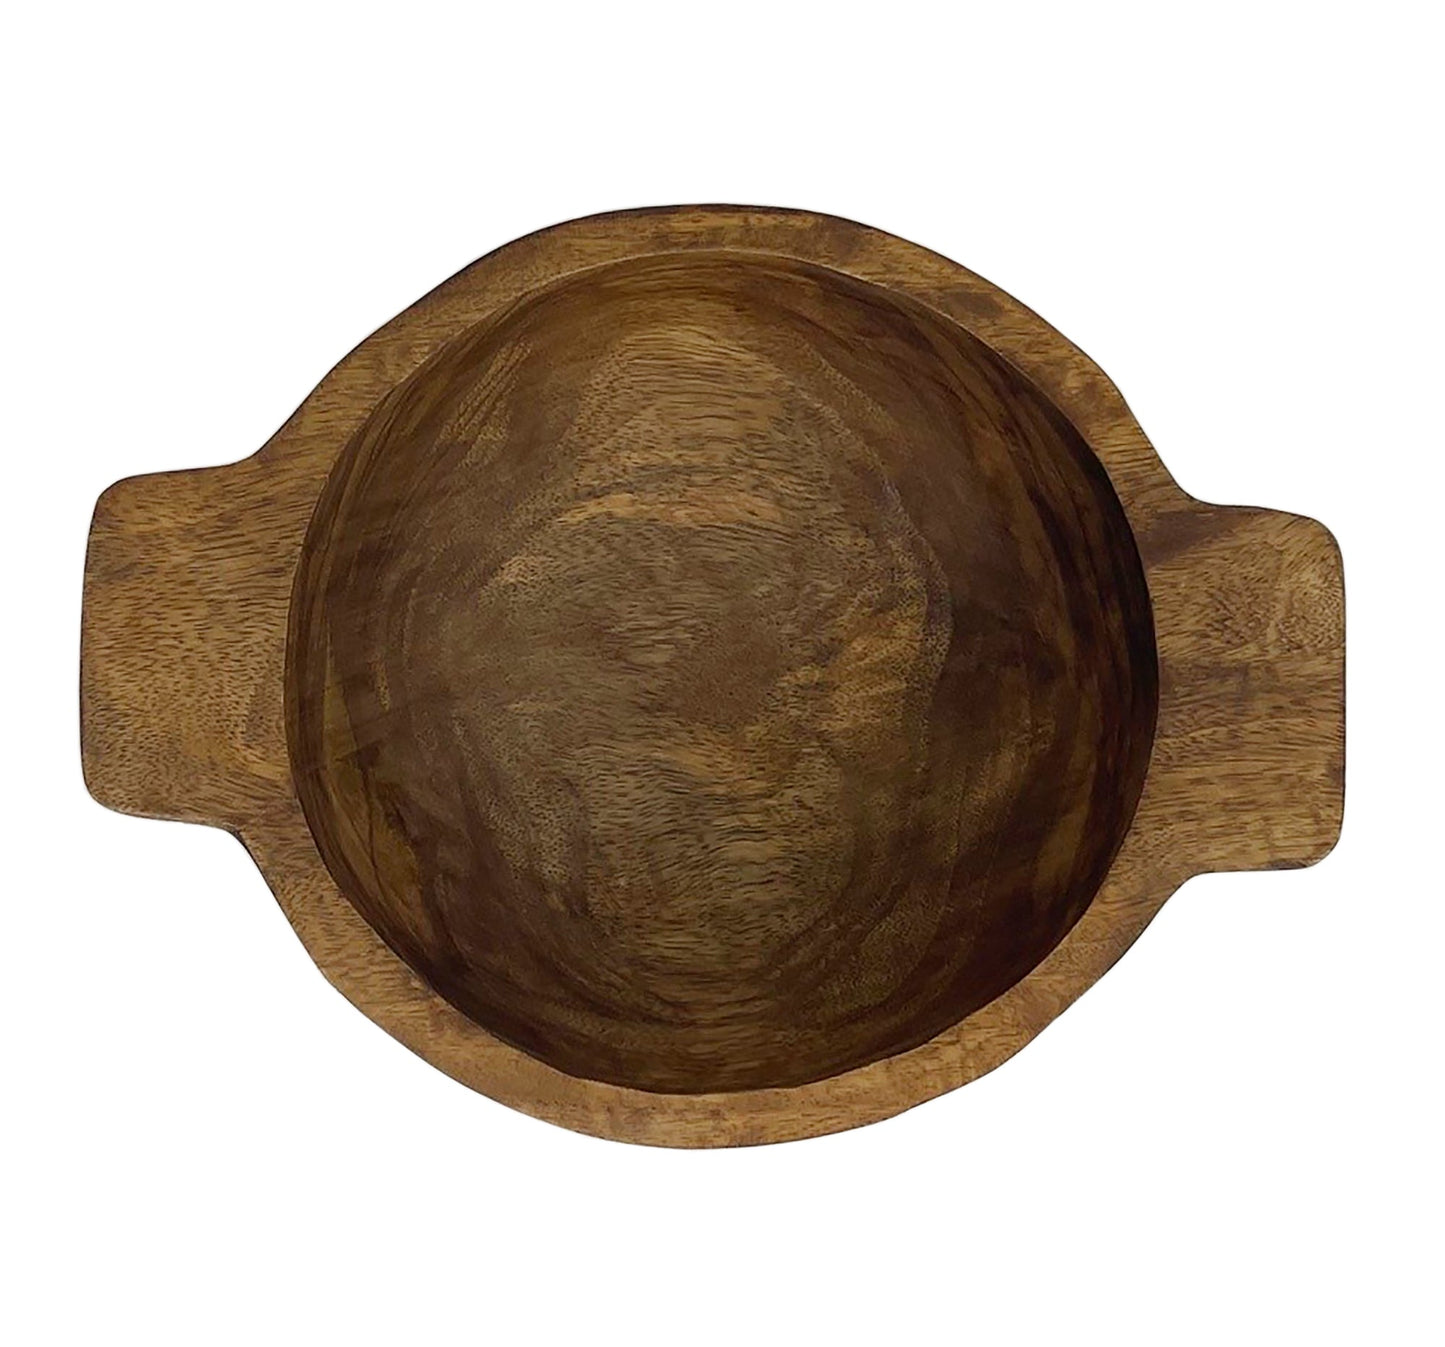 Mango Wood Round Bowl with Wood Handles